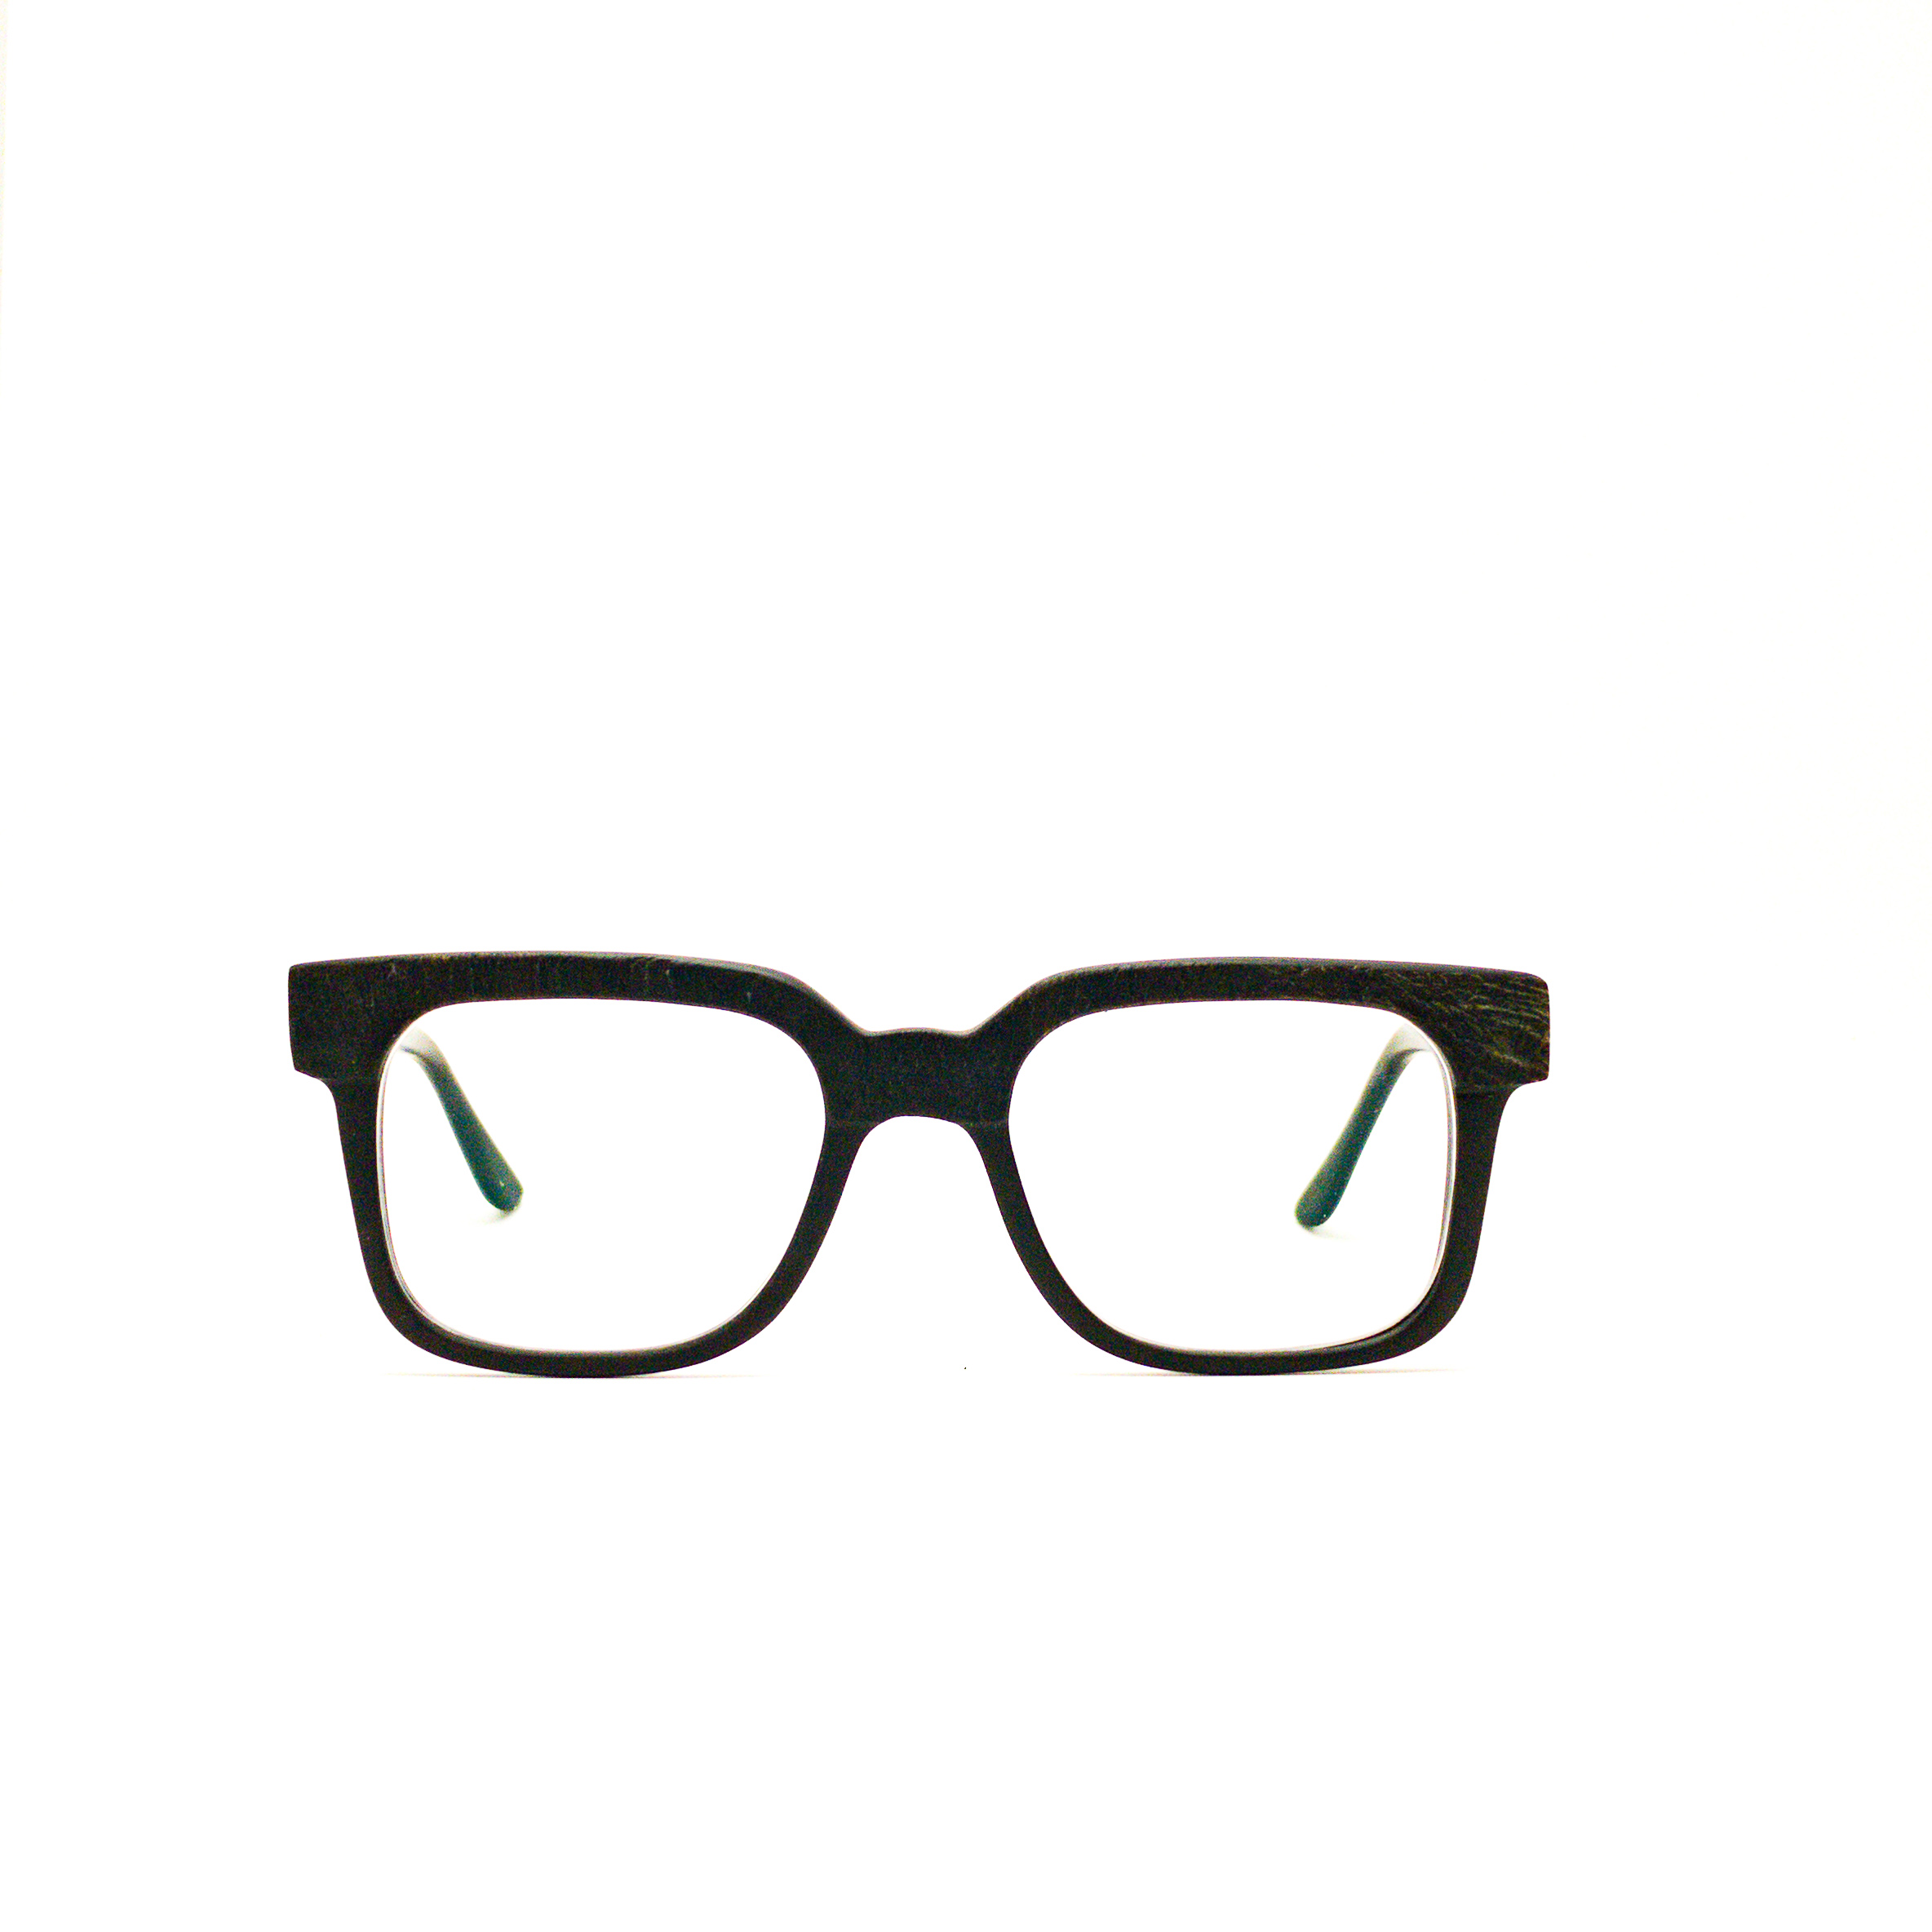 Optik Dudli AG - Negrelli Eyewear 220560